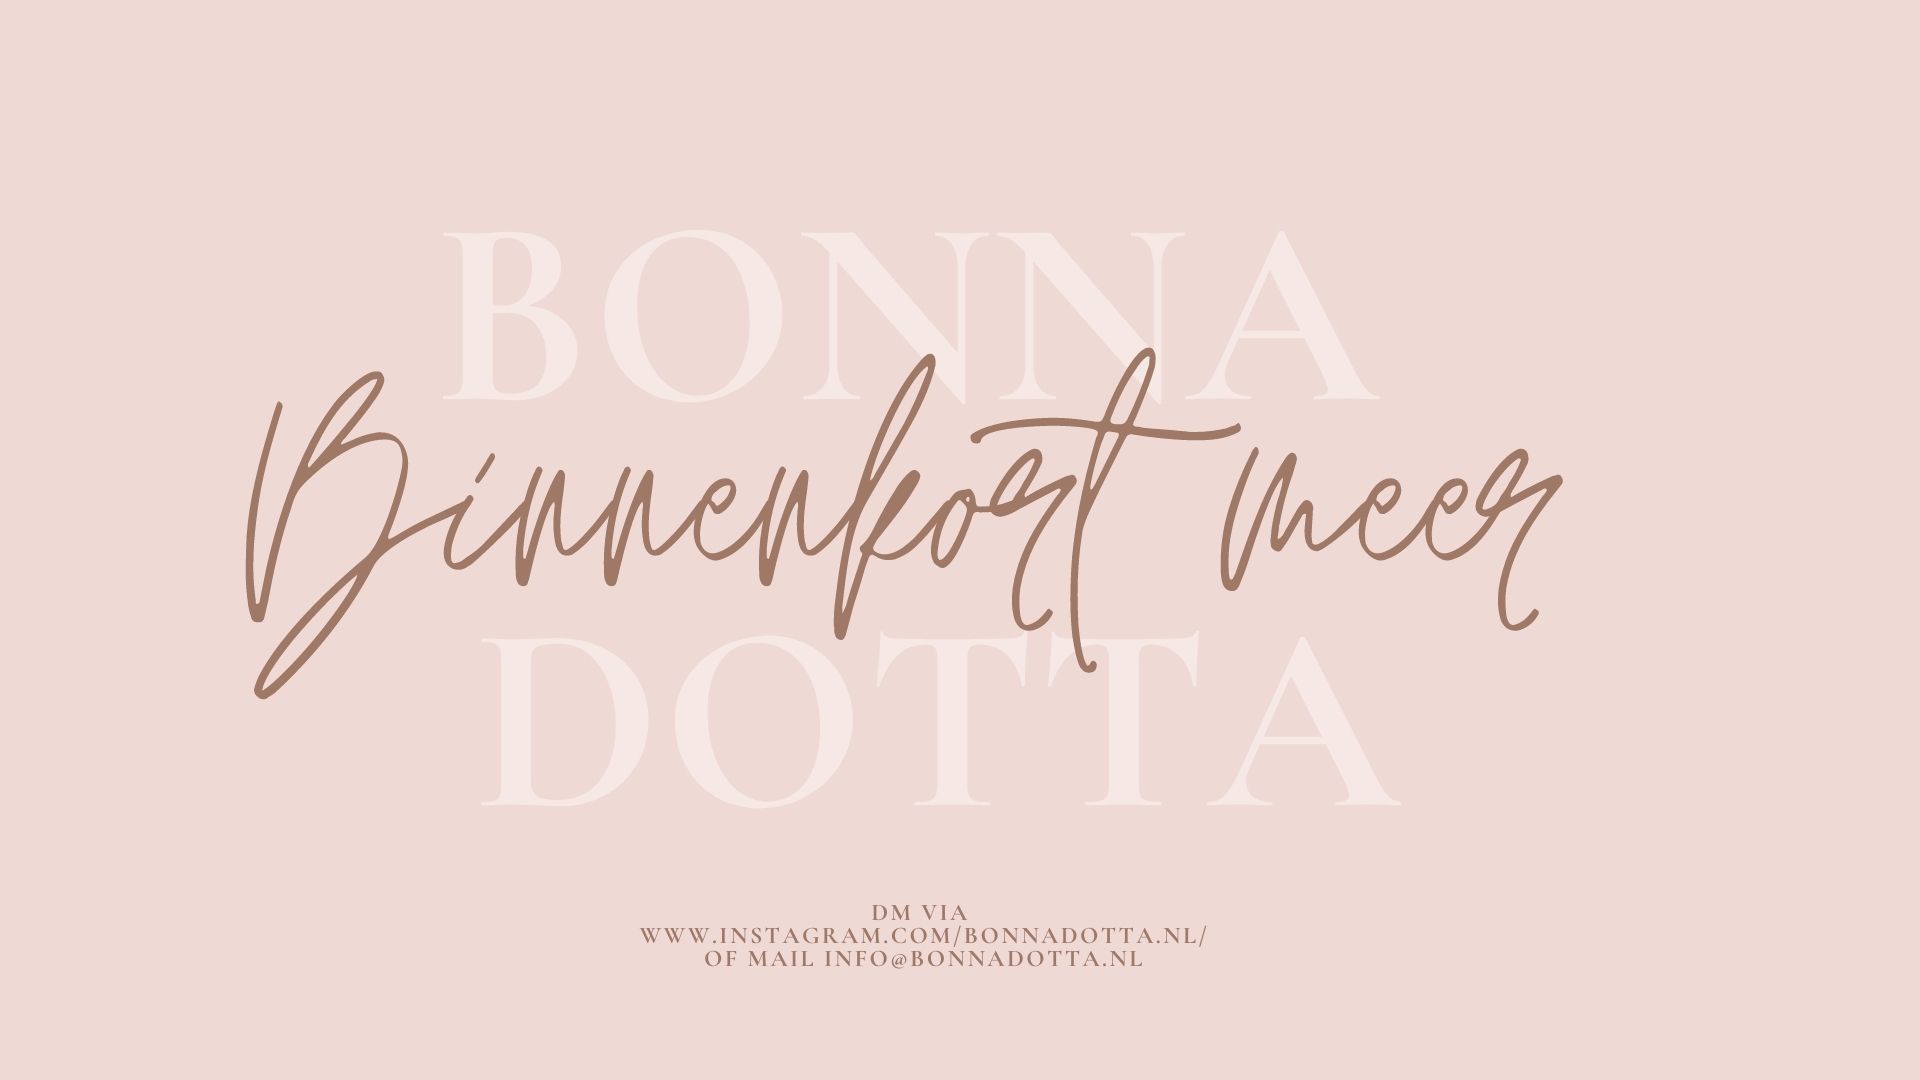 Bonna Dotta - Binnenkort meer